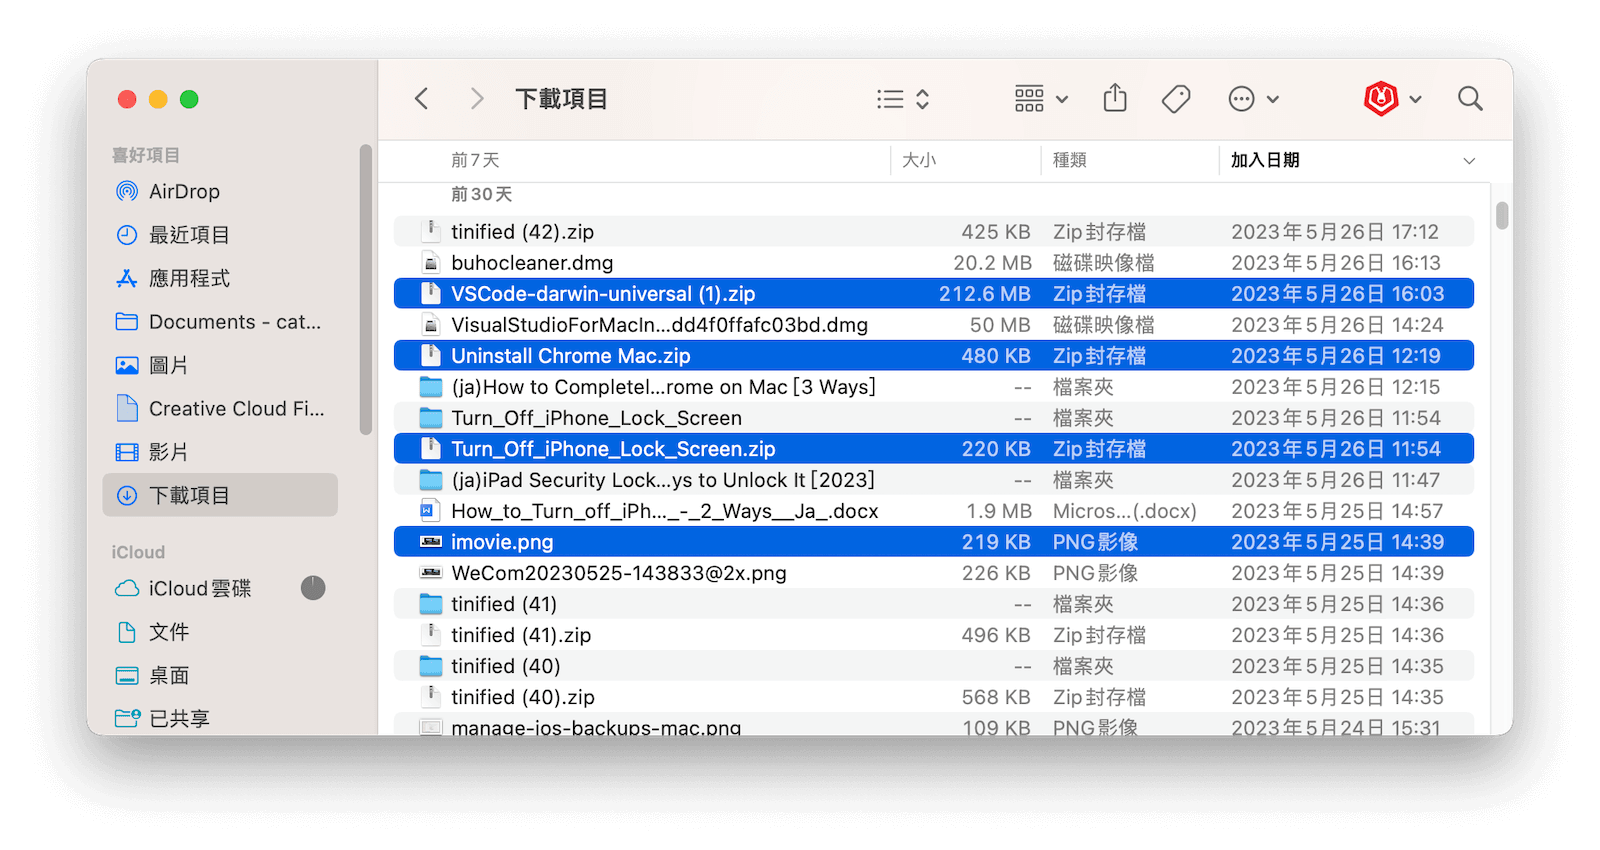 Mac 上選取多個不連續的檔案